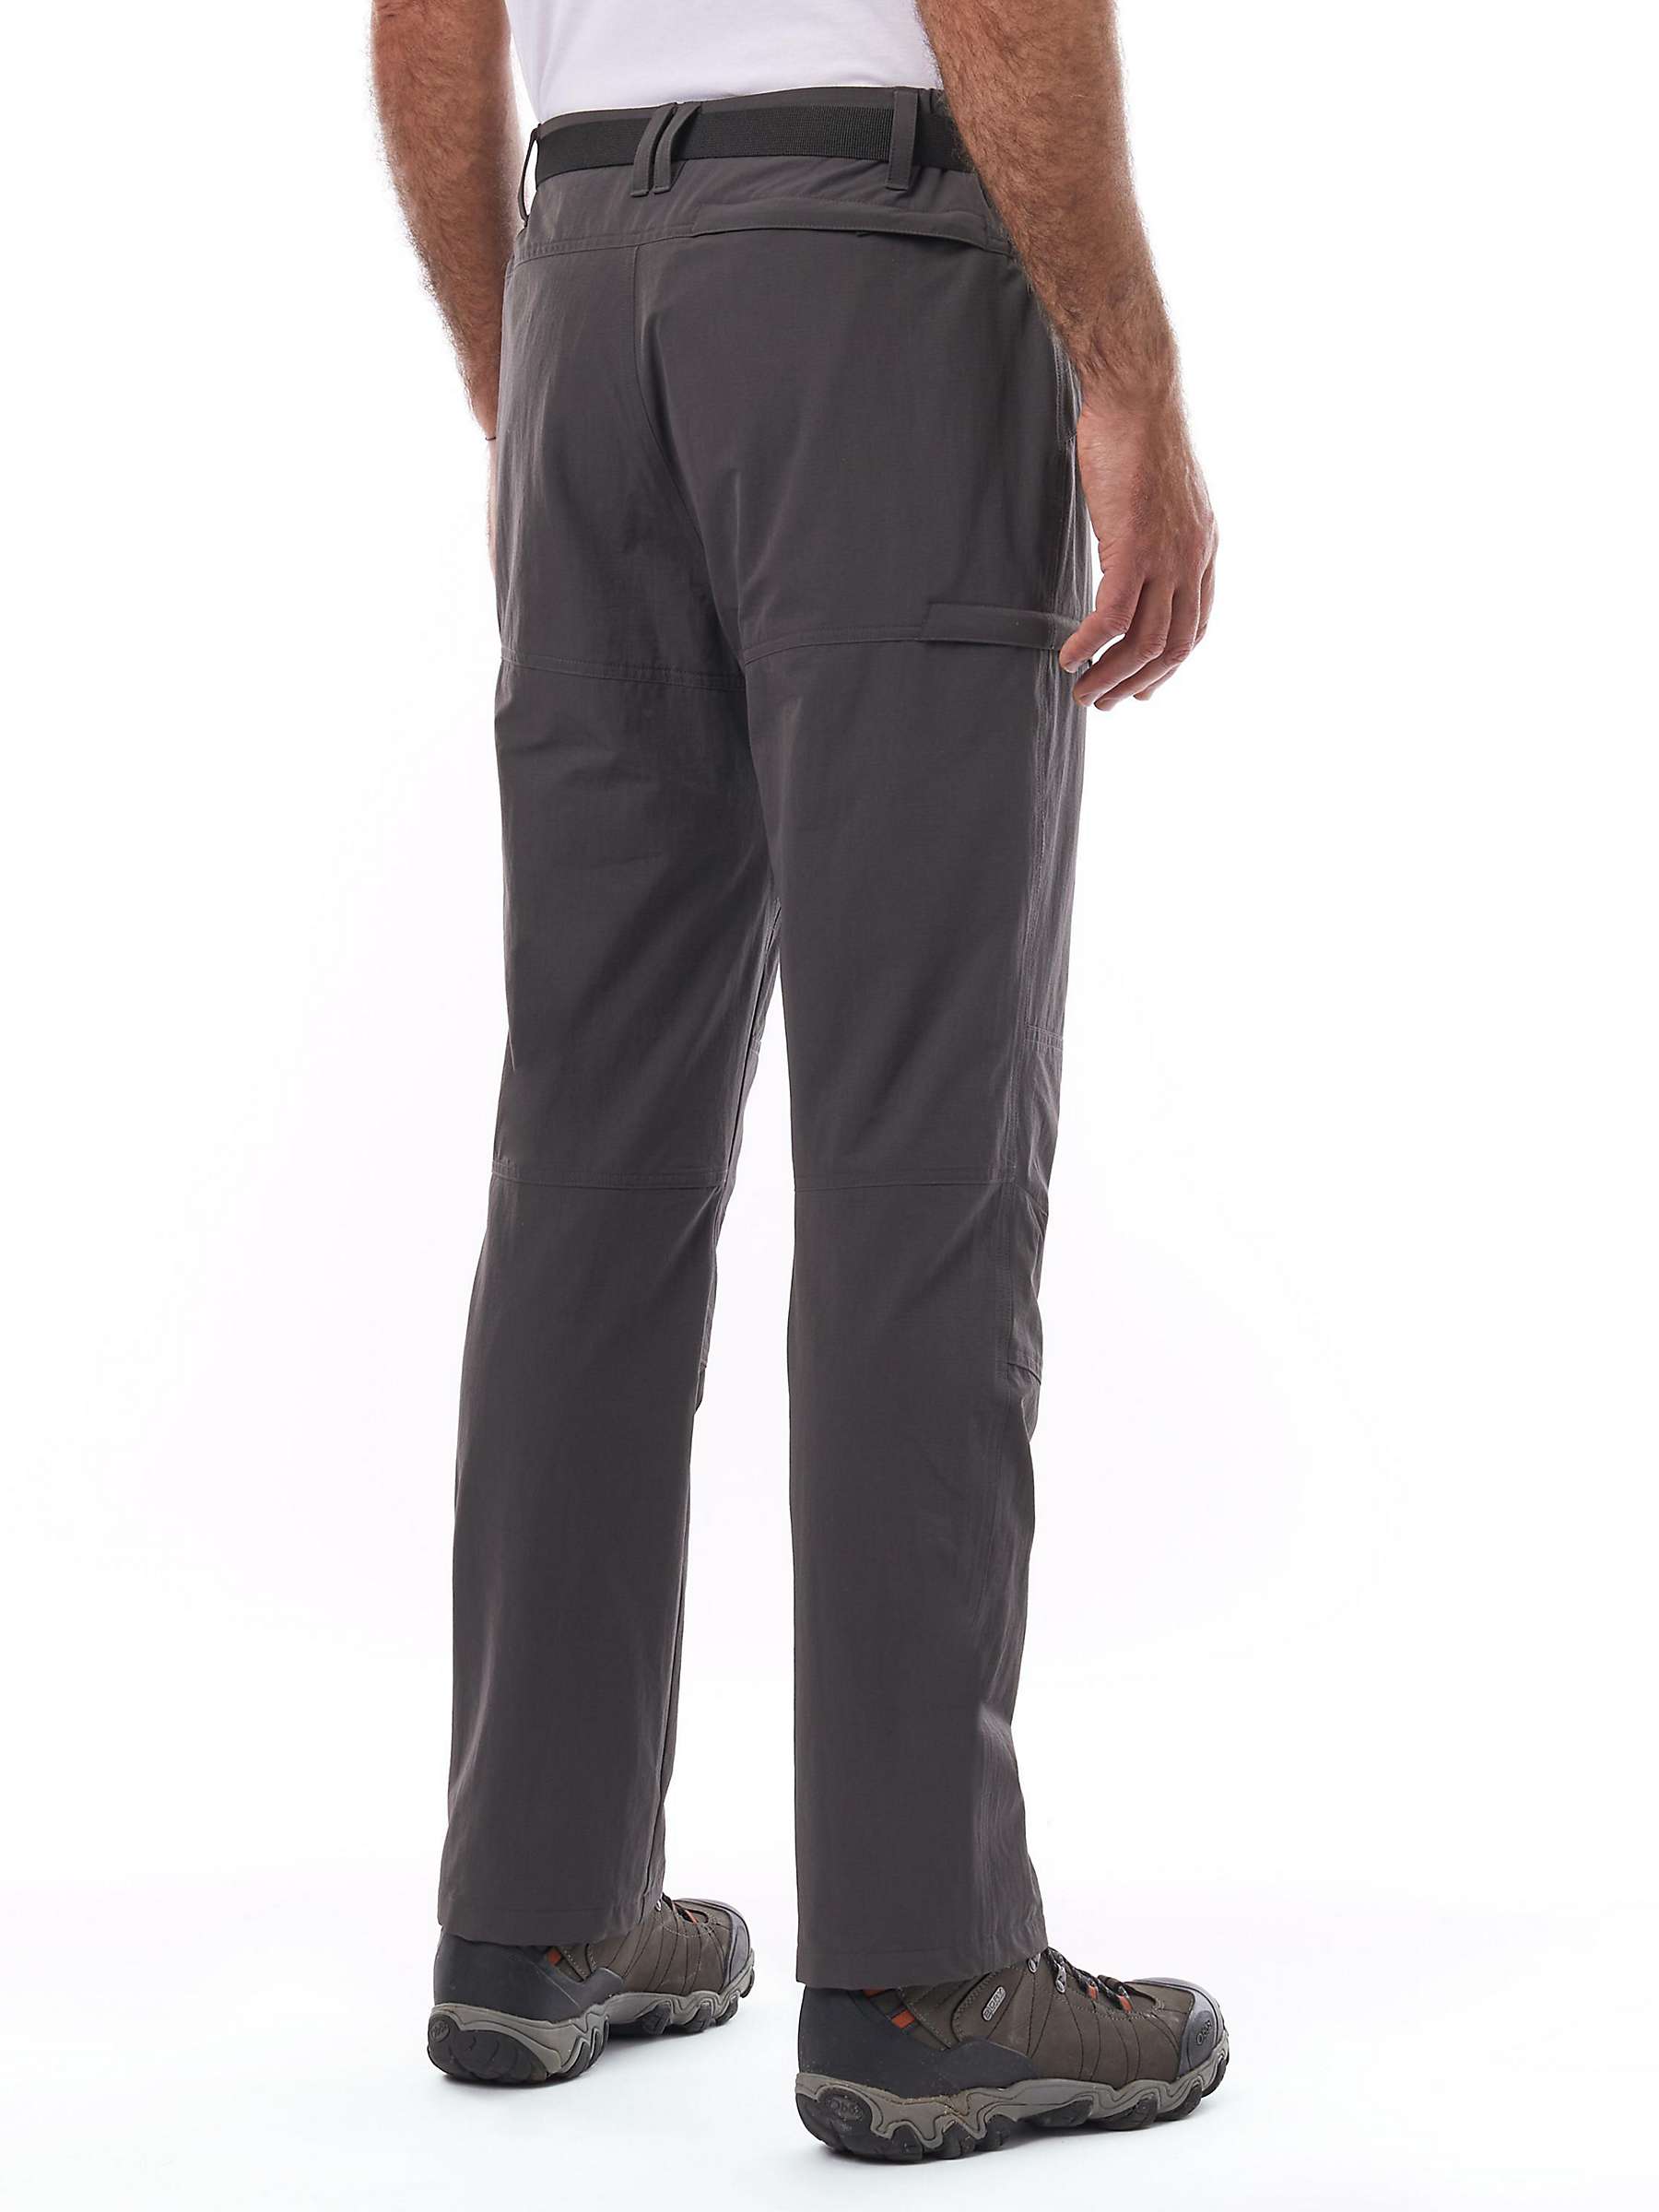 Buy Rohan Dry Ranger Walking Trousers Online at johnlewis.com